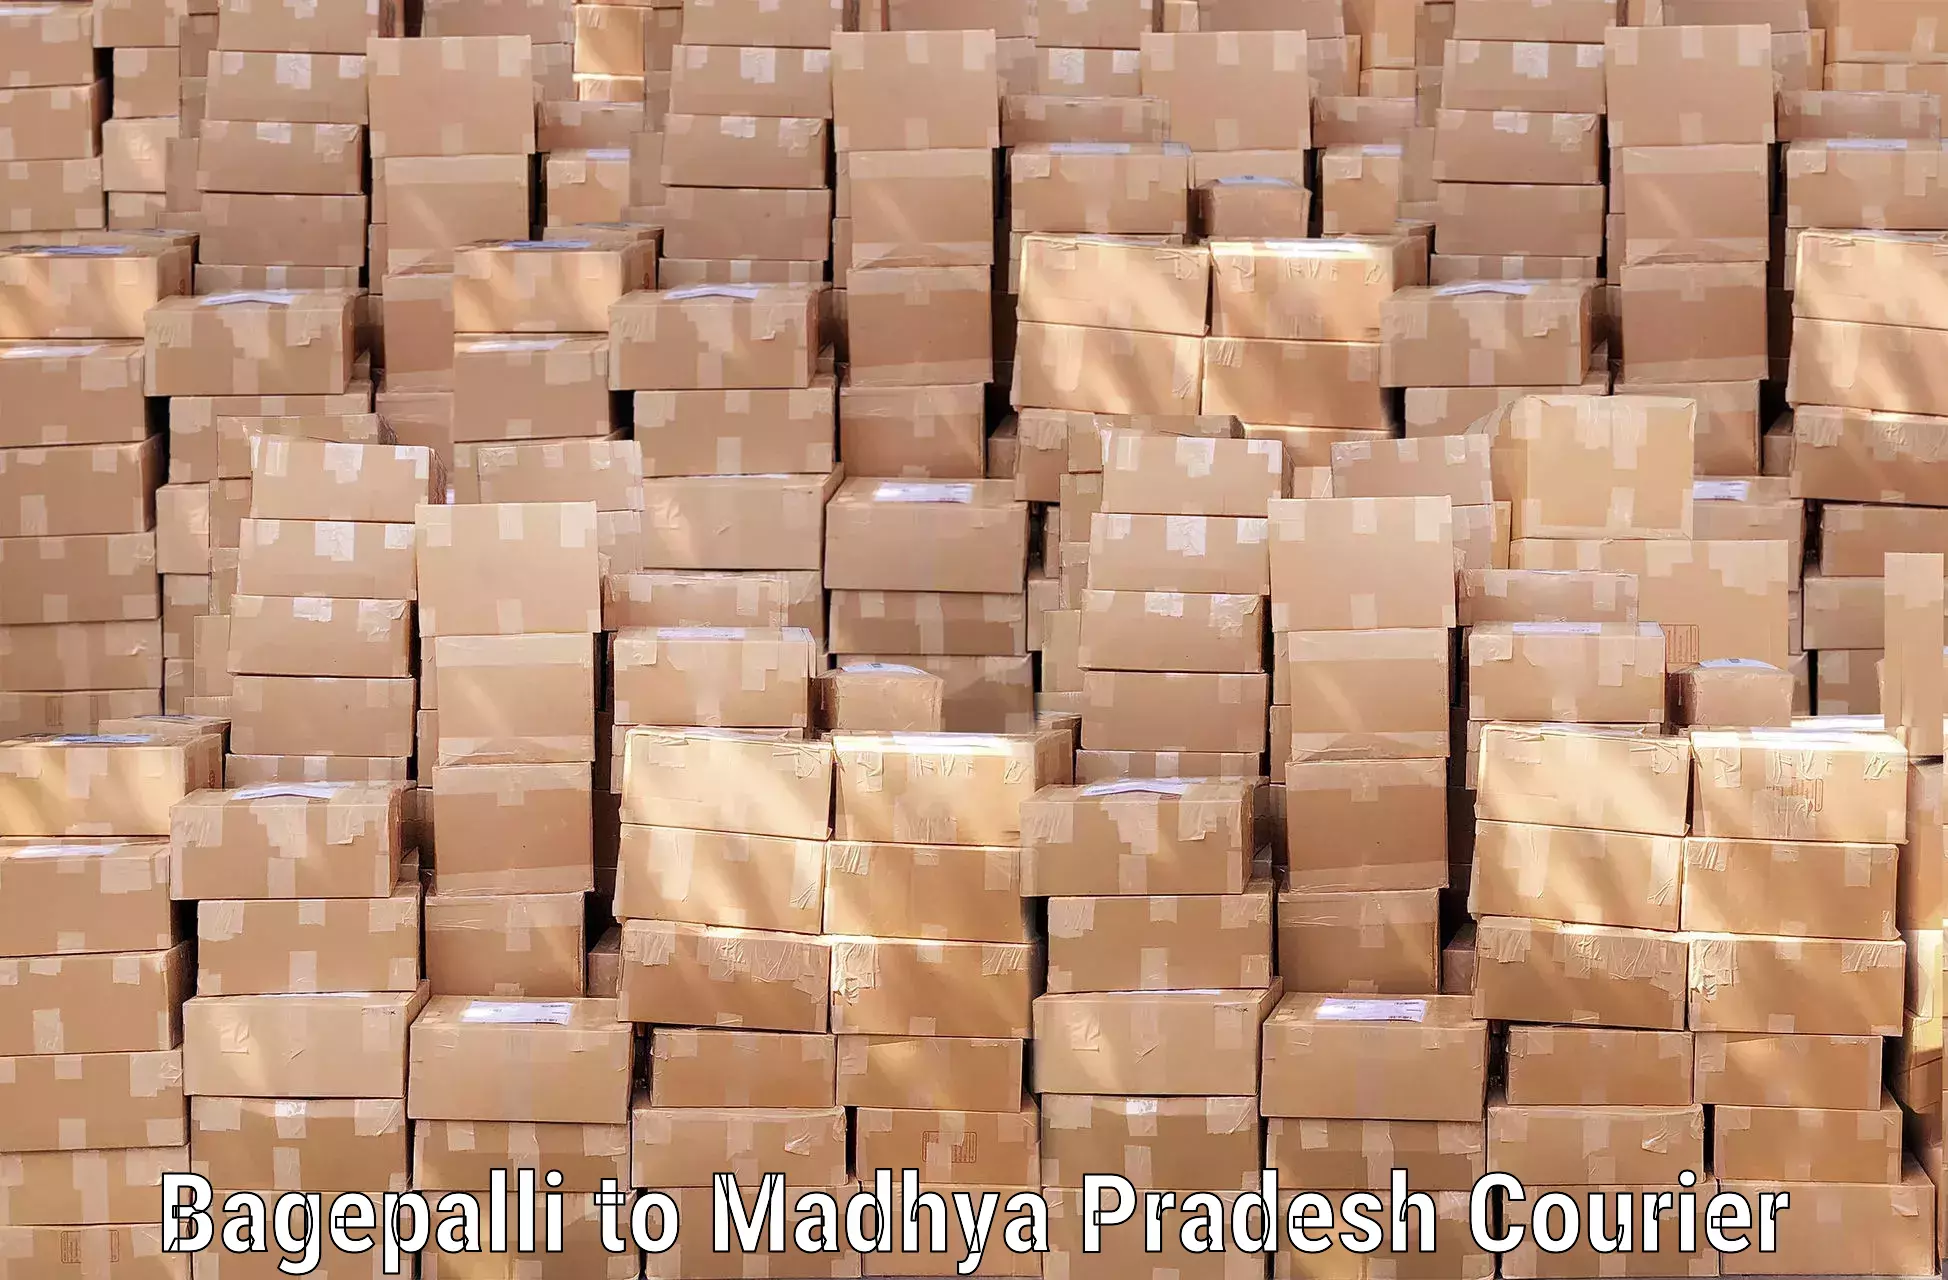 Baggage transport network Bagepalli to Madhya Pradesh